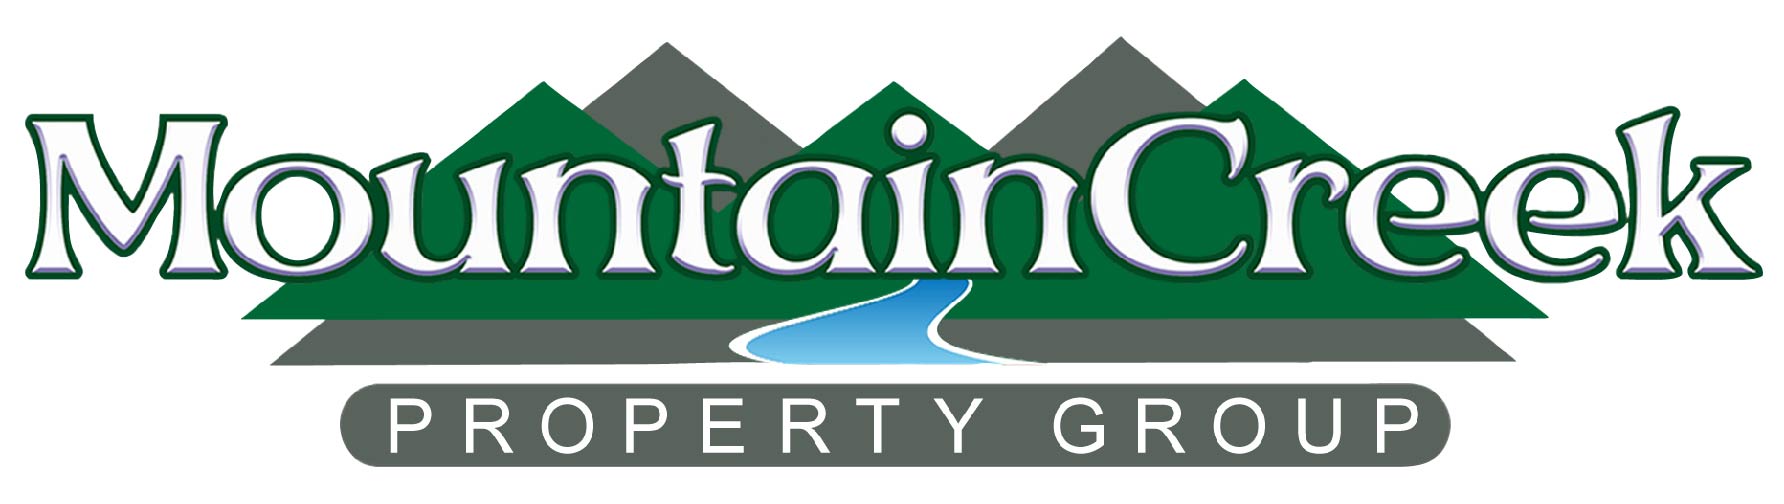 MountainCreek Property Group Transparent Large_2 Vector